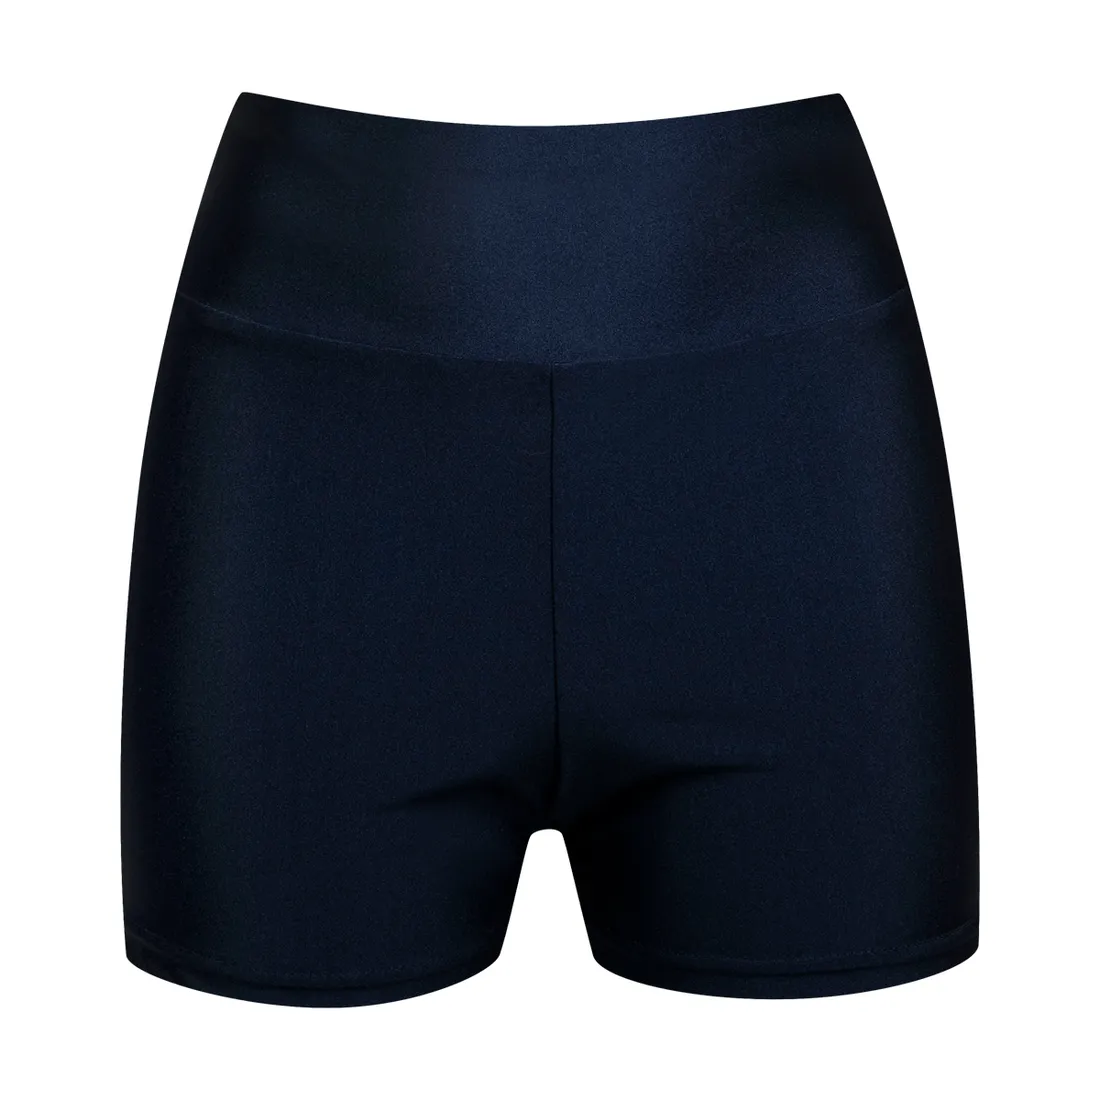 Wide waist netball short navy - WOMEN's Cycle Shorts | Ackermans